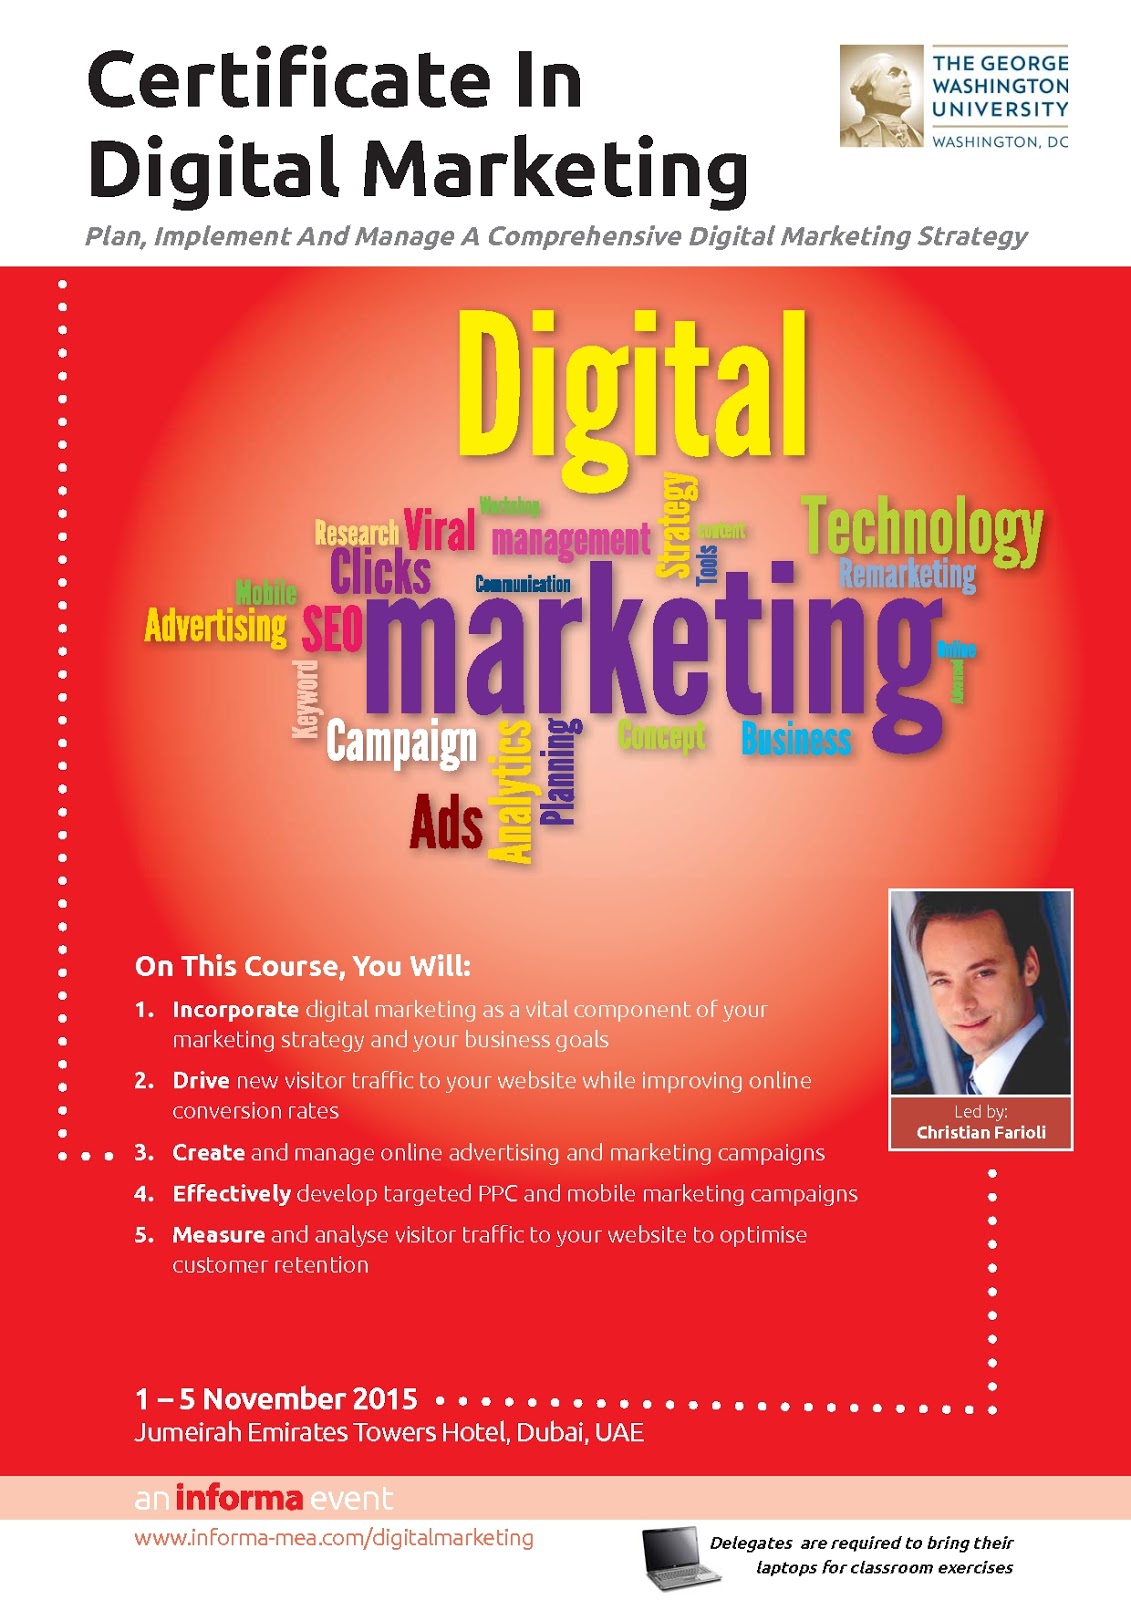 Certificate In Digital Marketing 101164 